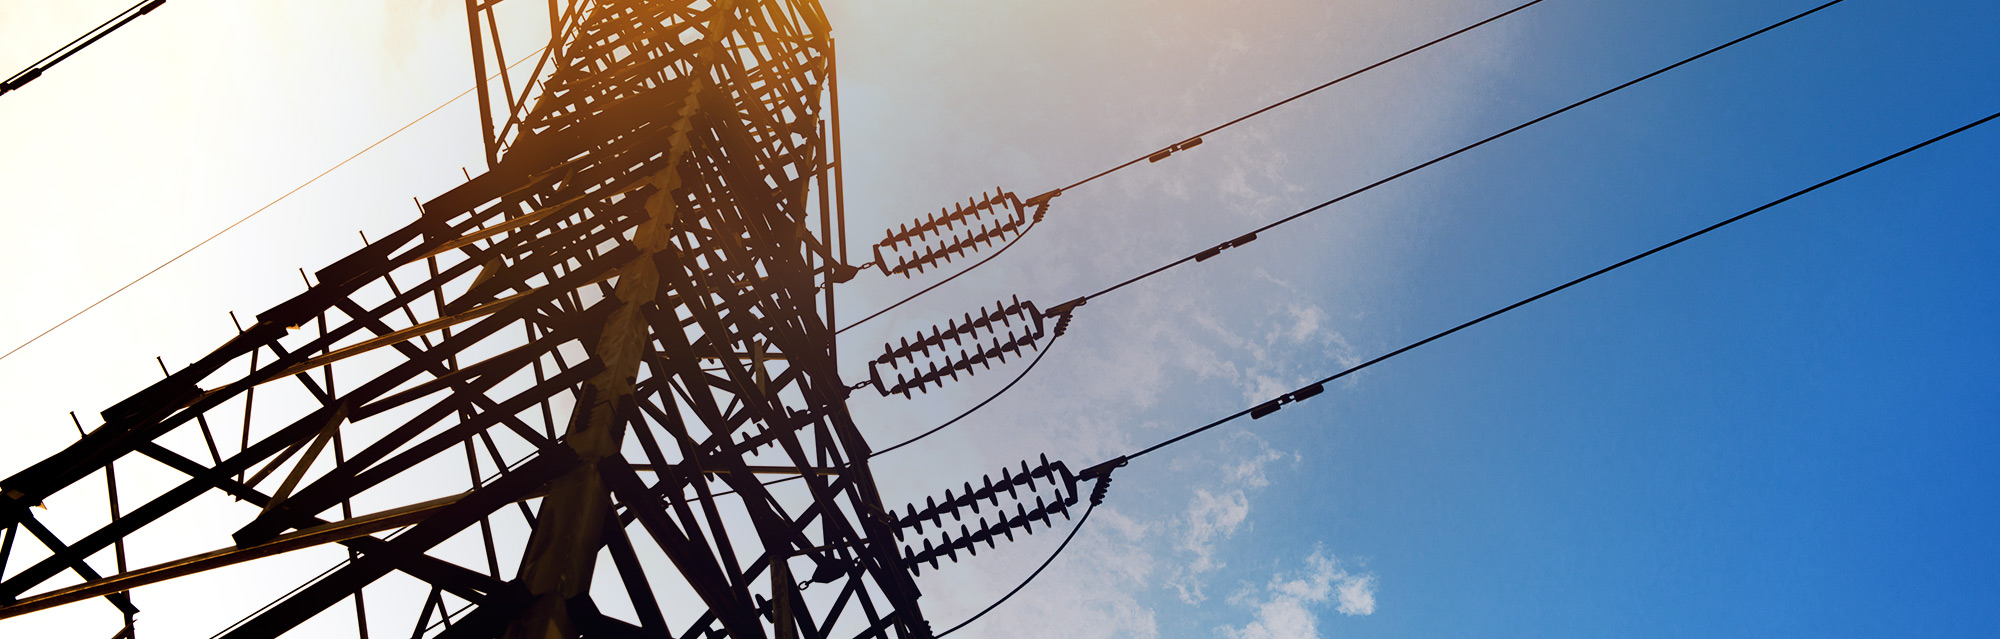 energy_telecommunications_and_utilities.jpg